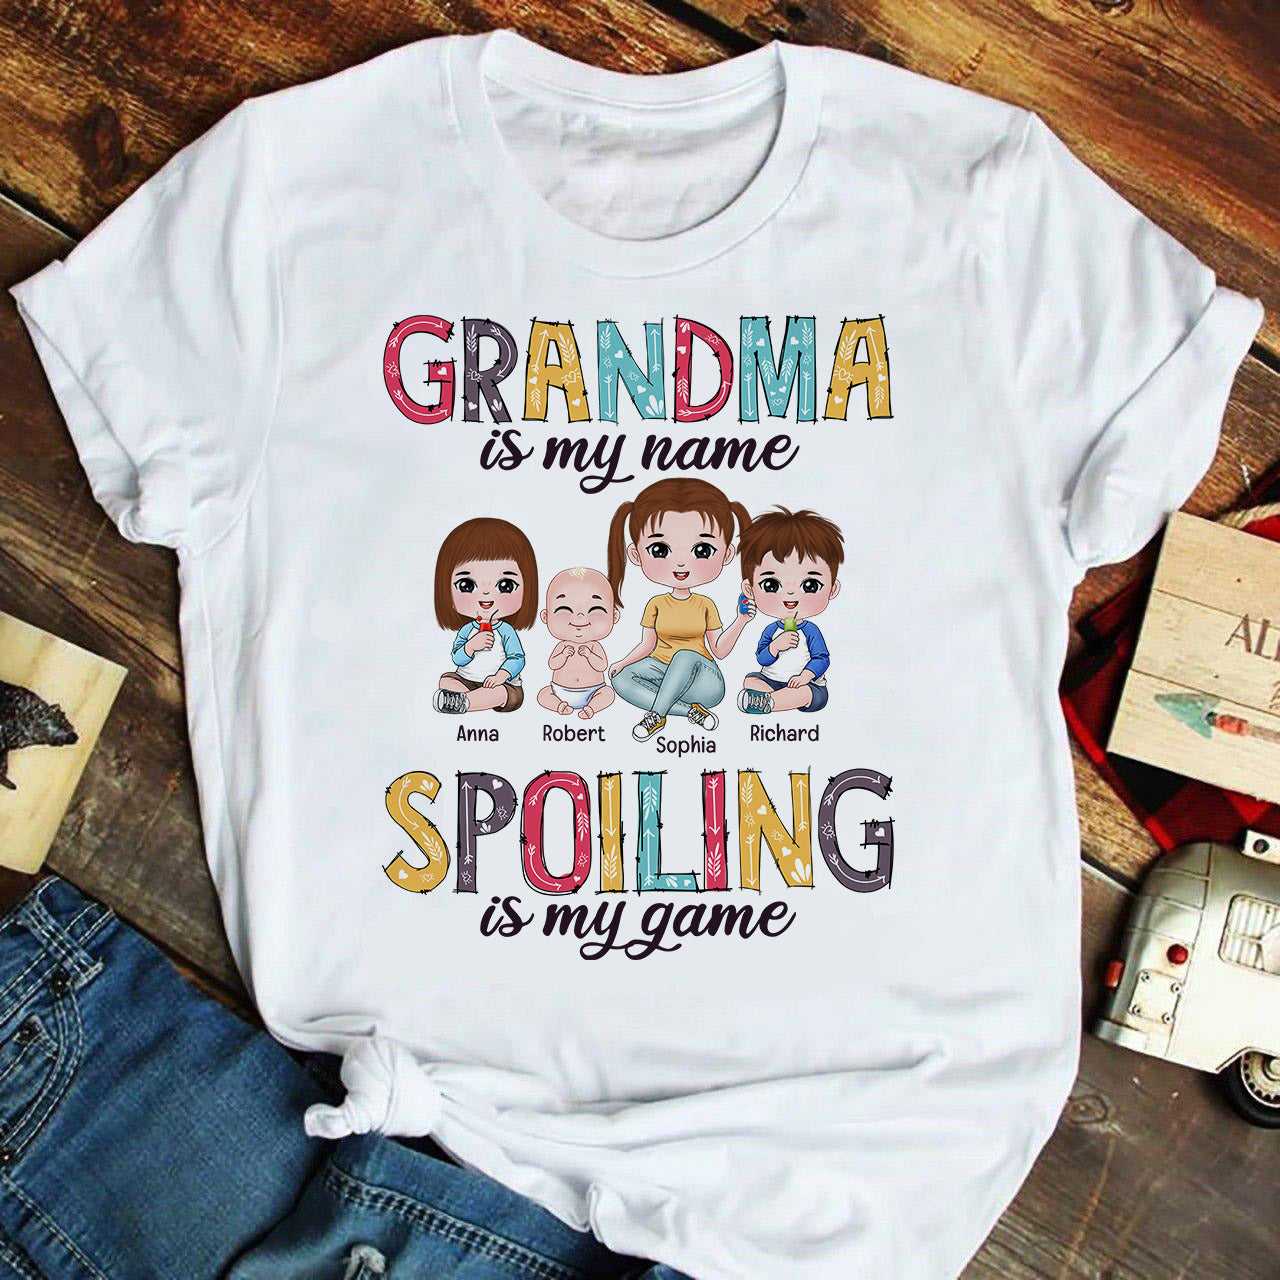 Grandma's My Name, Spoiling Is My Game - Engraved YETI Tumbler